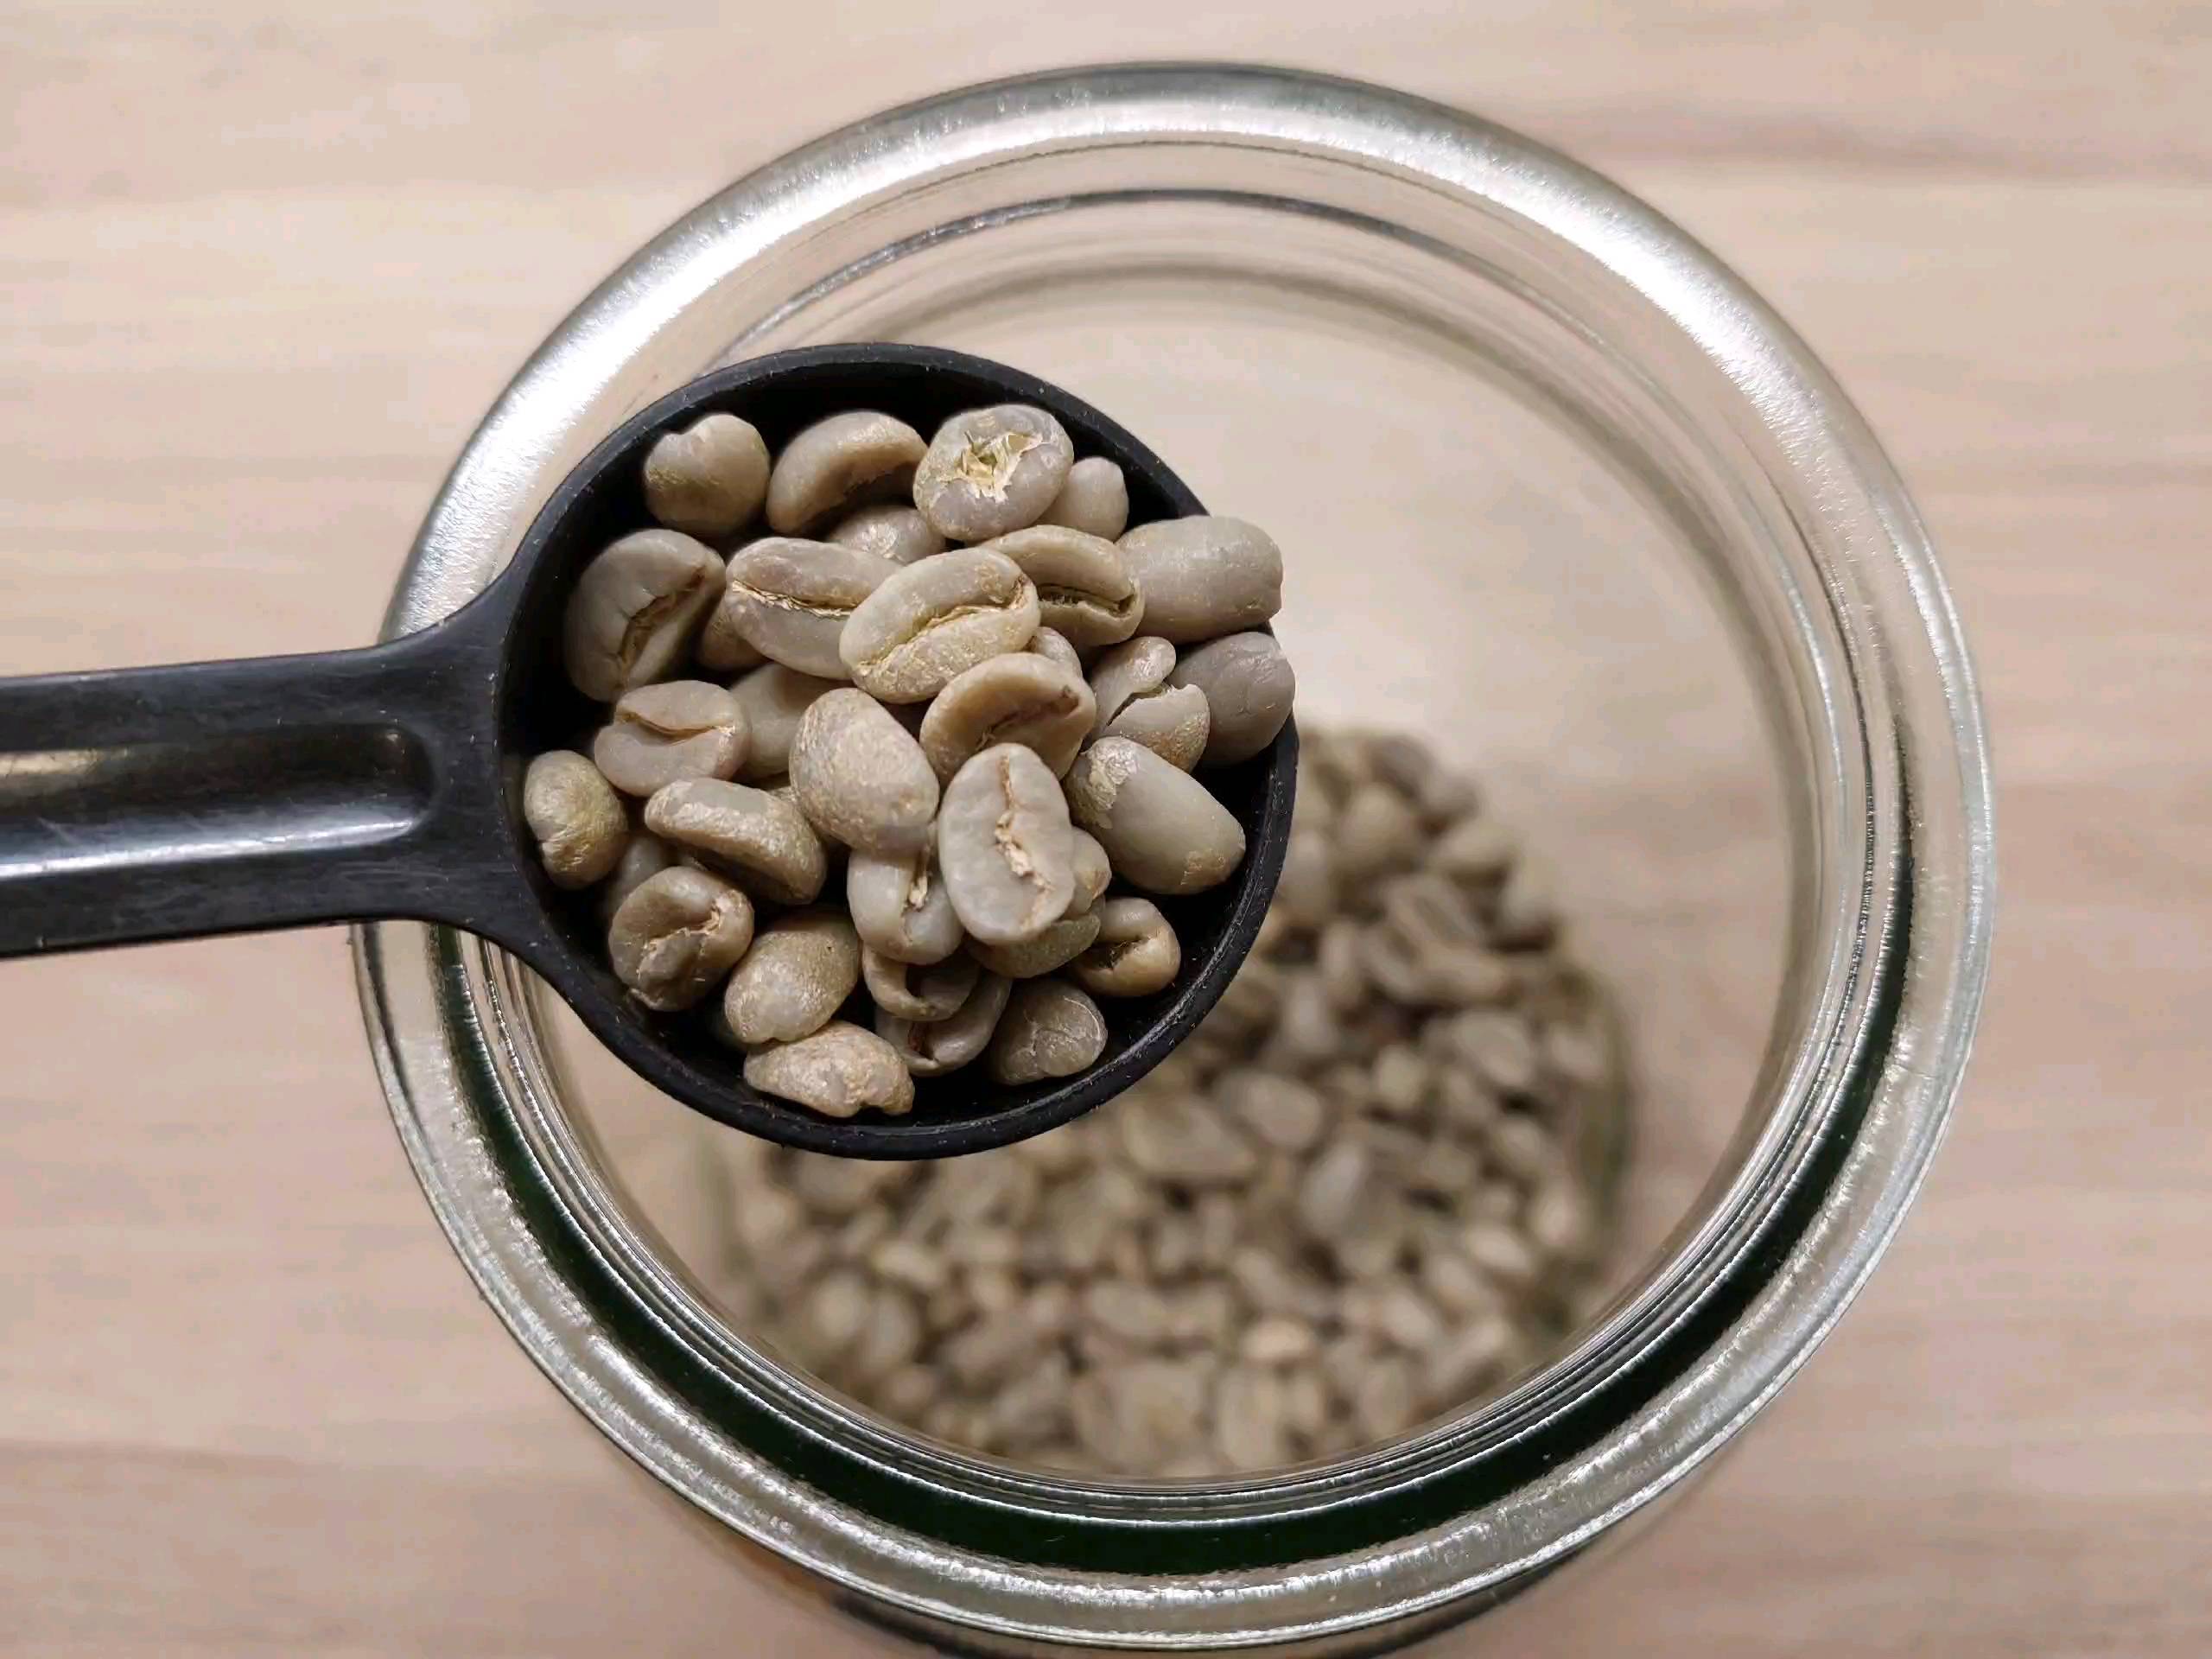 #homecoffeeroasting #greencoffee #homemadecoffee #coffeeroasting #roastingcoffee #ethiopiancoffee